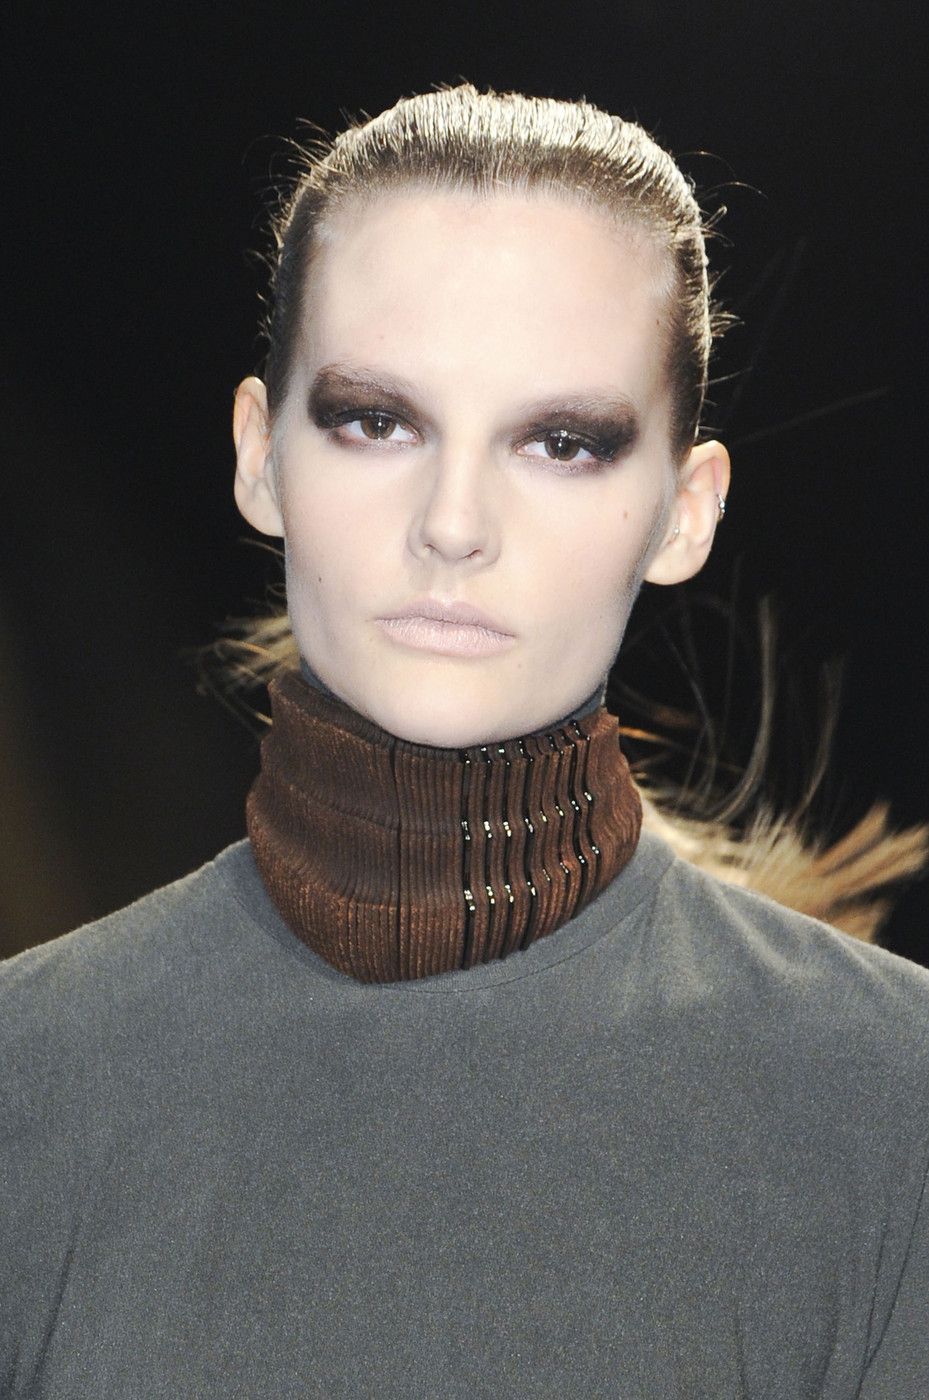 Donna Karan Fall/Winter 2013 – New York fashion week | Fab Fashion Fix